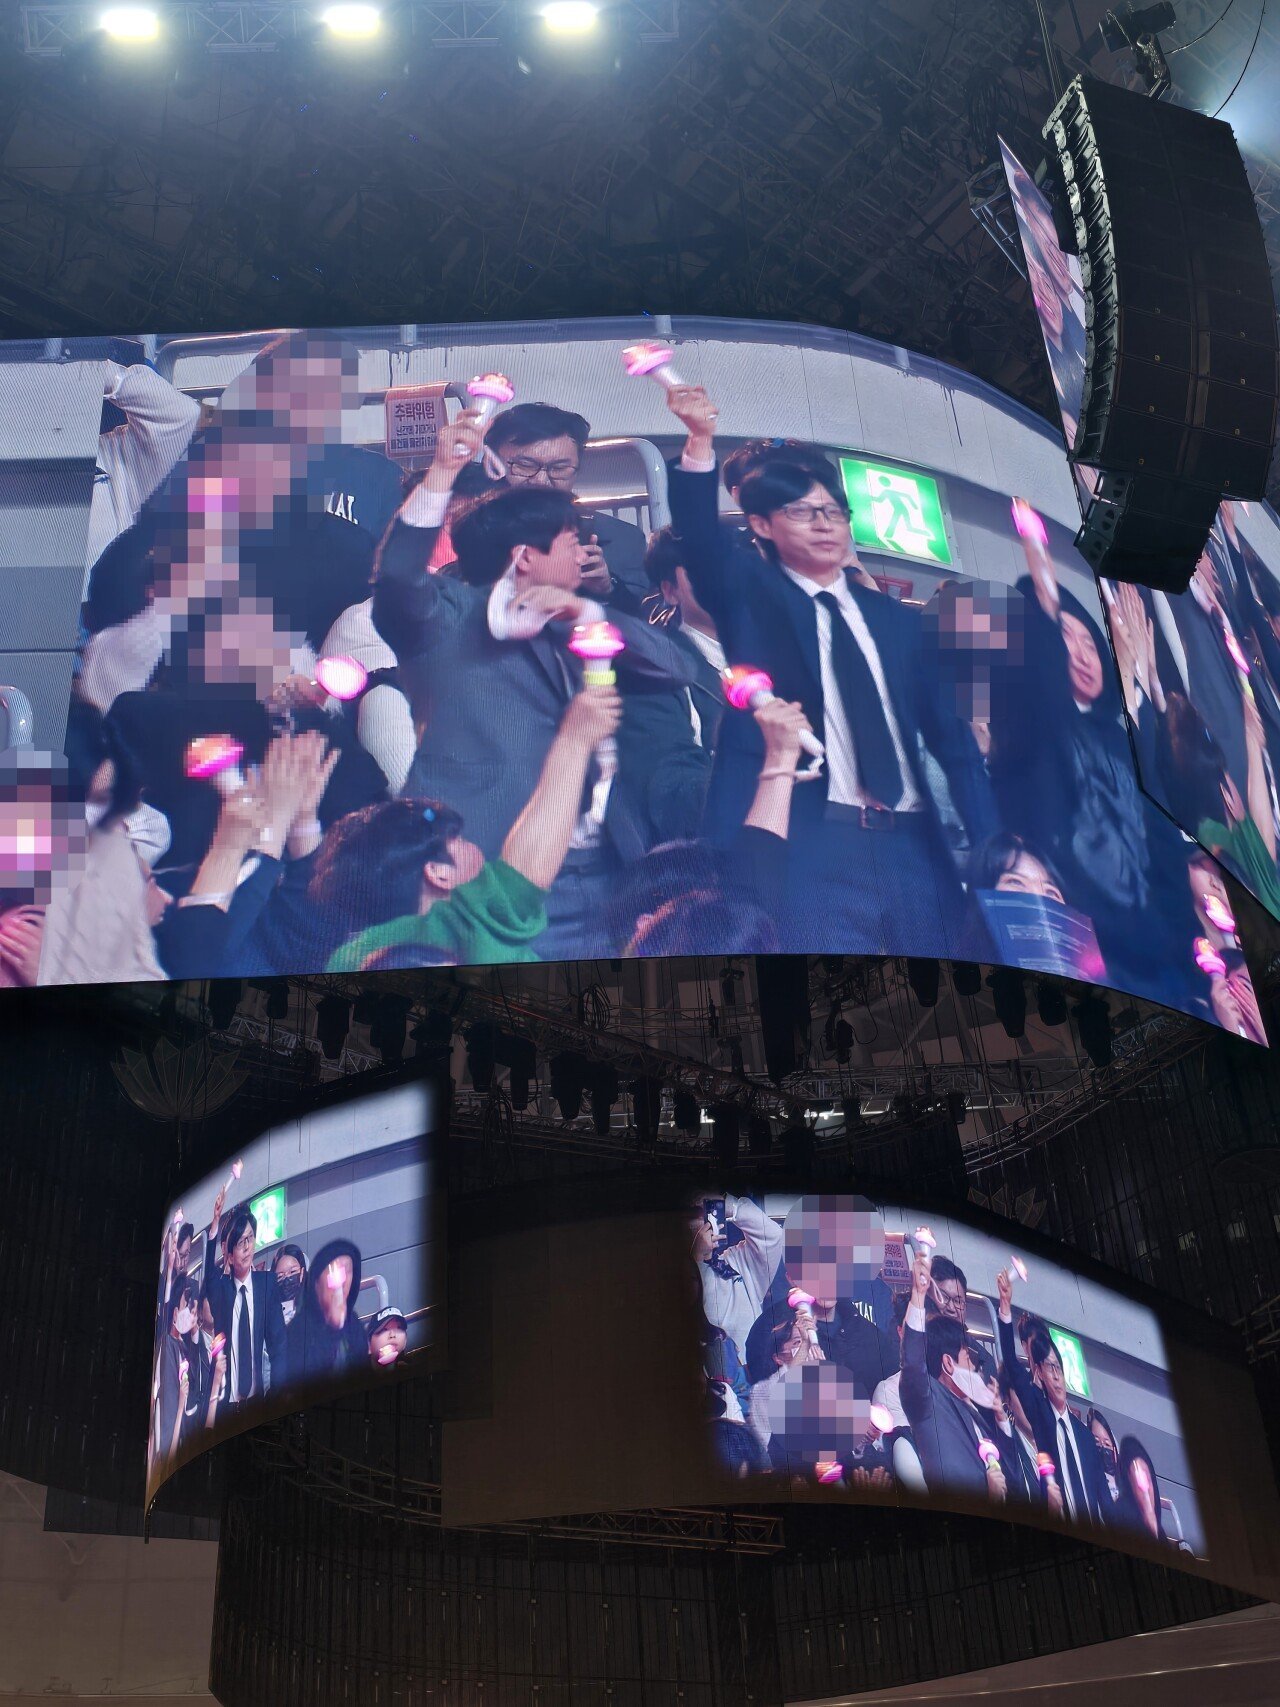 imageㅇㅇ (1).jpg 아이유 콘서트에서 응원봉 흔들다 카메라 잡힌 유재석,박명수,양세찬.jpg